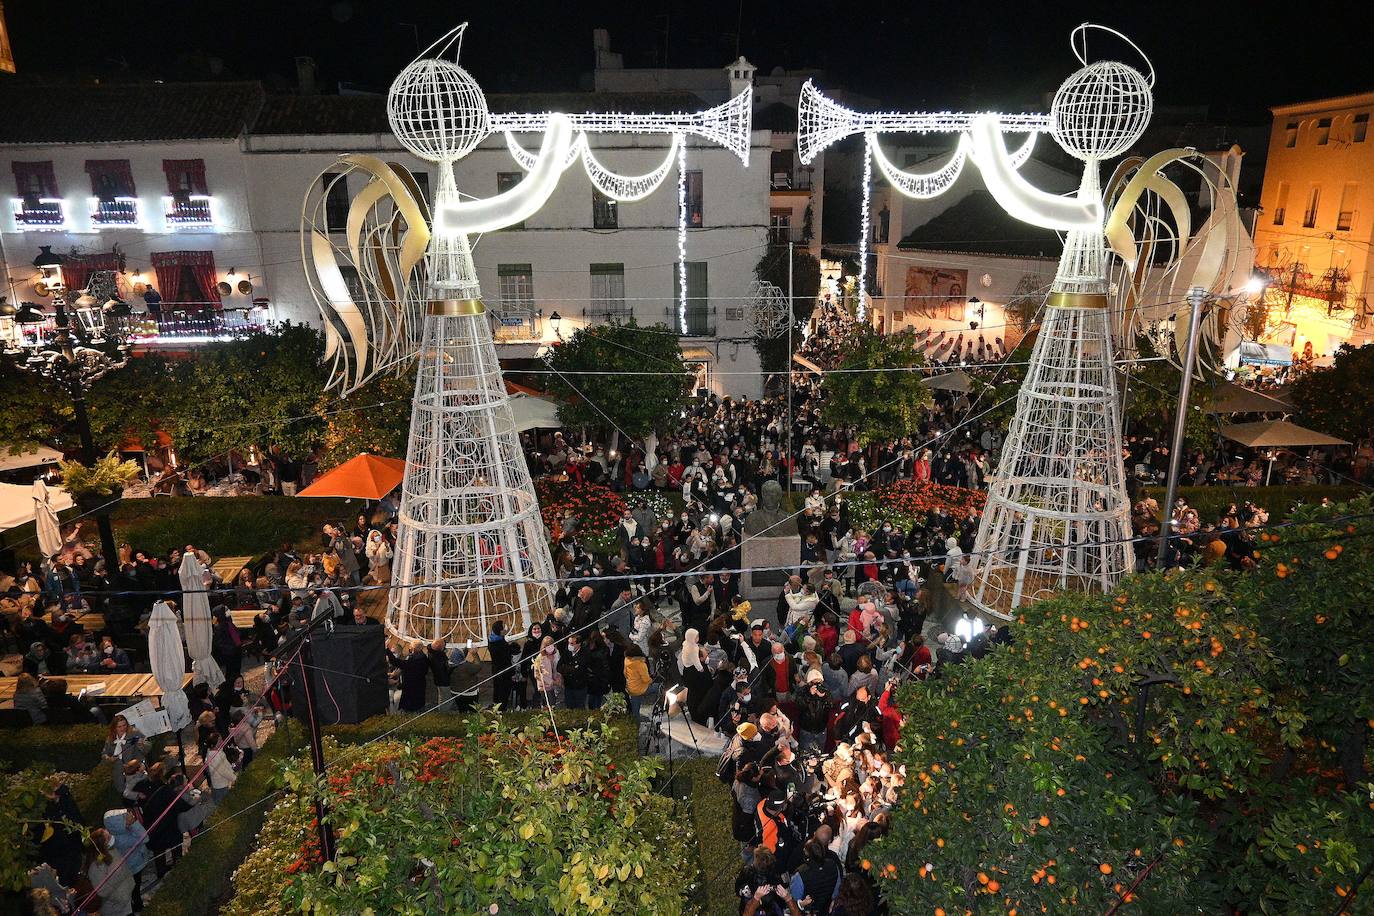 Crowds gathered at Marbella's Christmas lights despite the threat of rain.